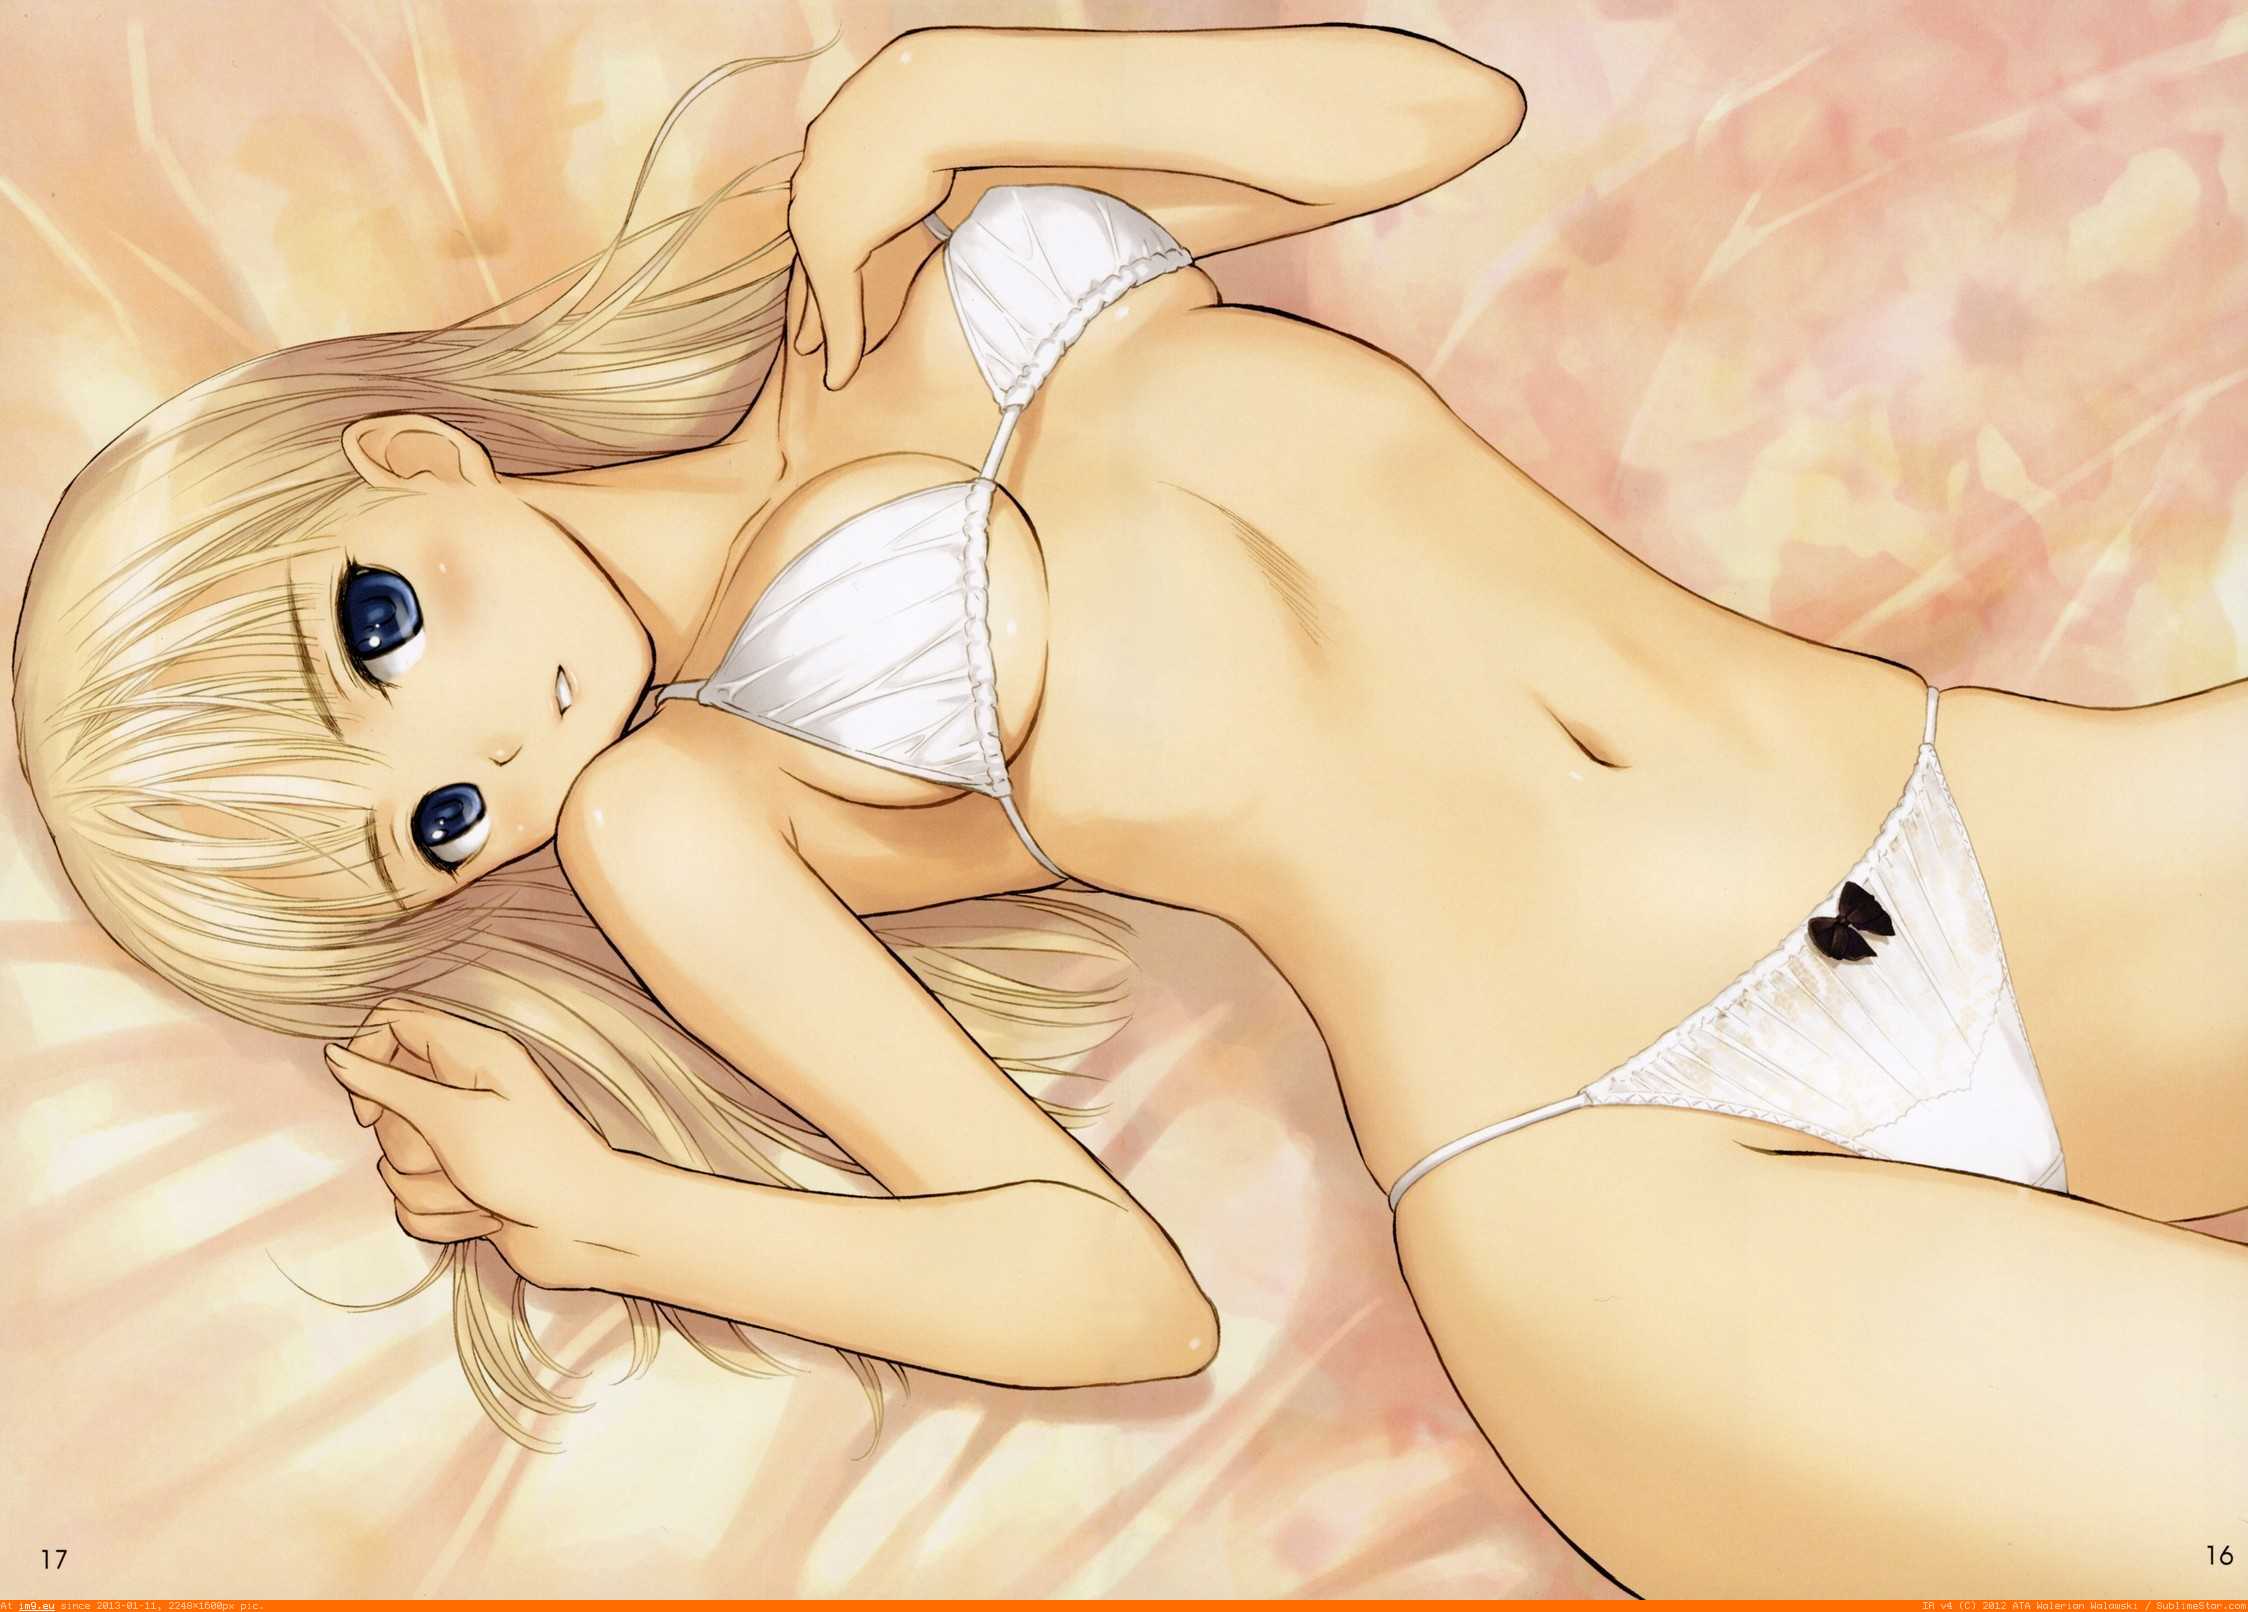 Pic. #Sexy #Anime #Wallpapers #Girls, 169990B â€“ Anime wallpapers and pics